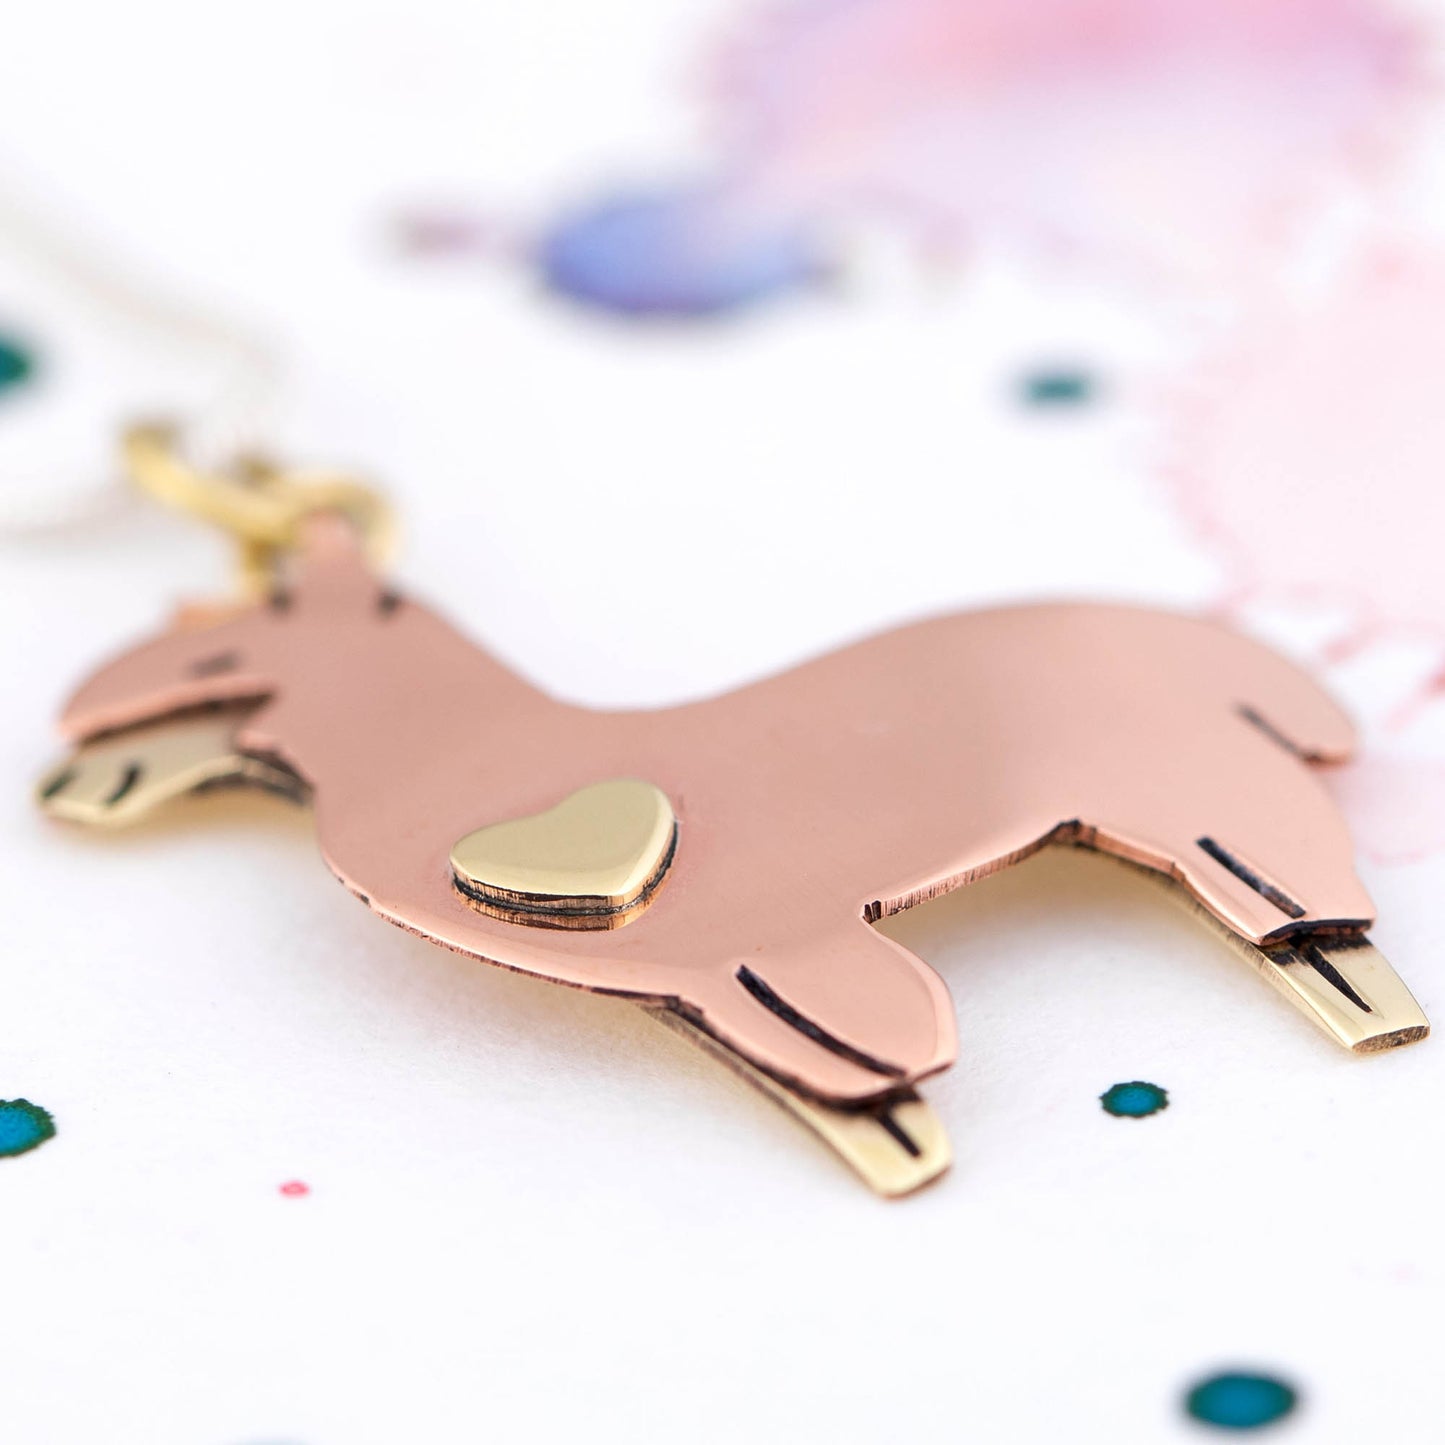 Alpaca Brass & Copper Necklace